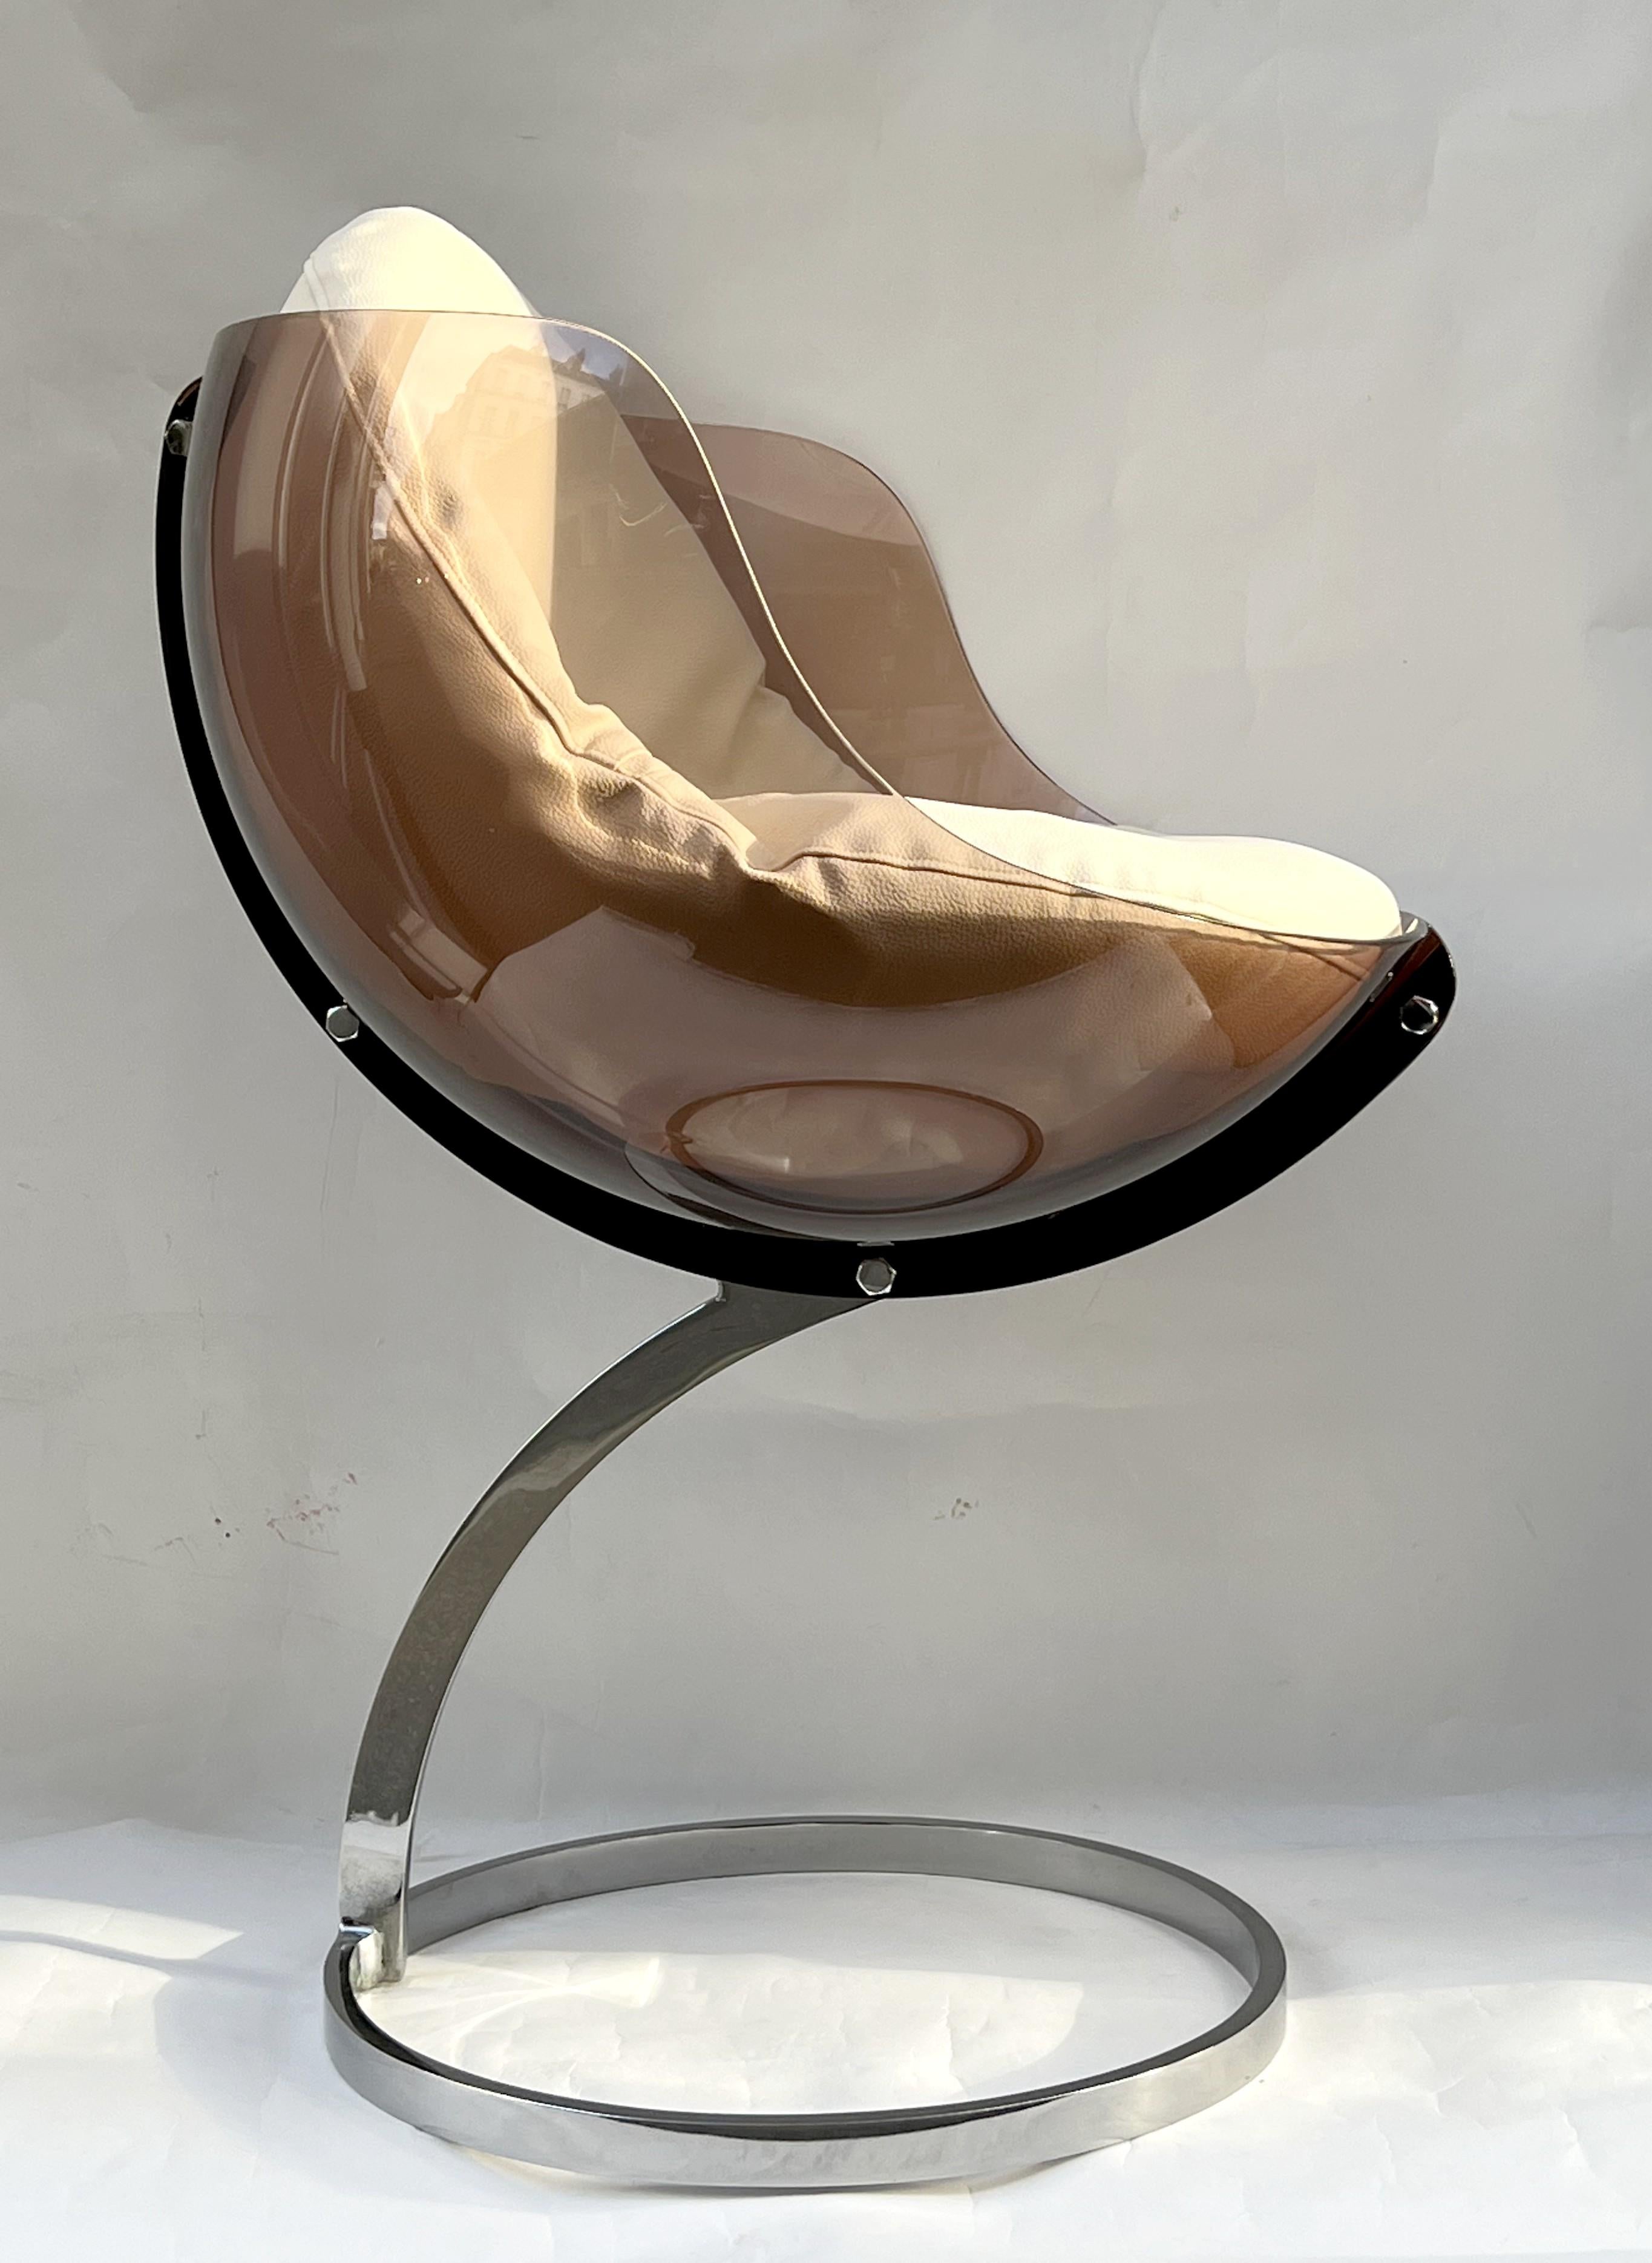 boris tabacoff sphere chair